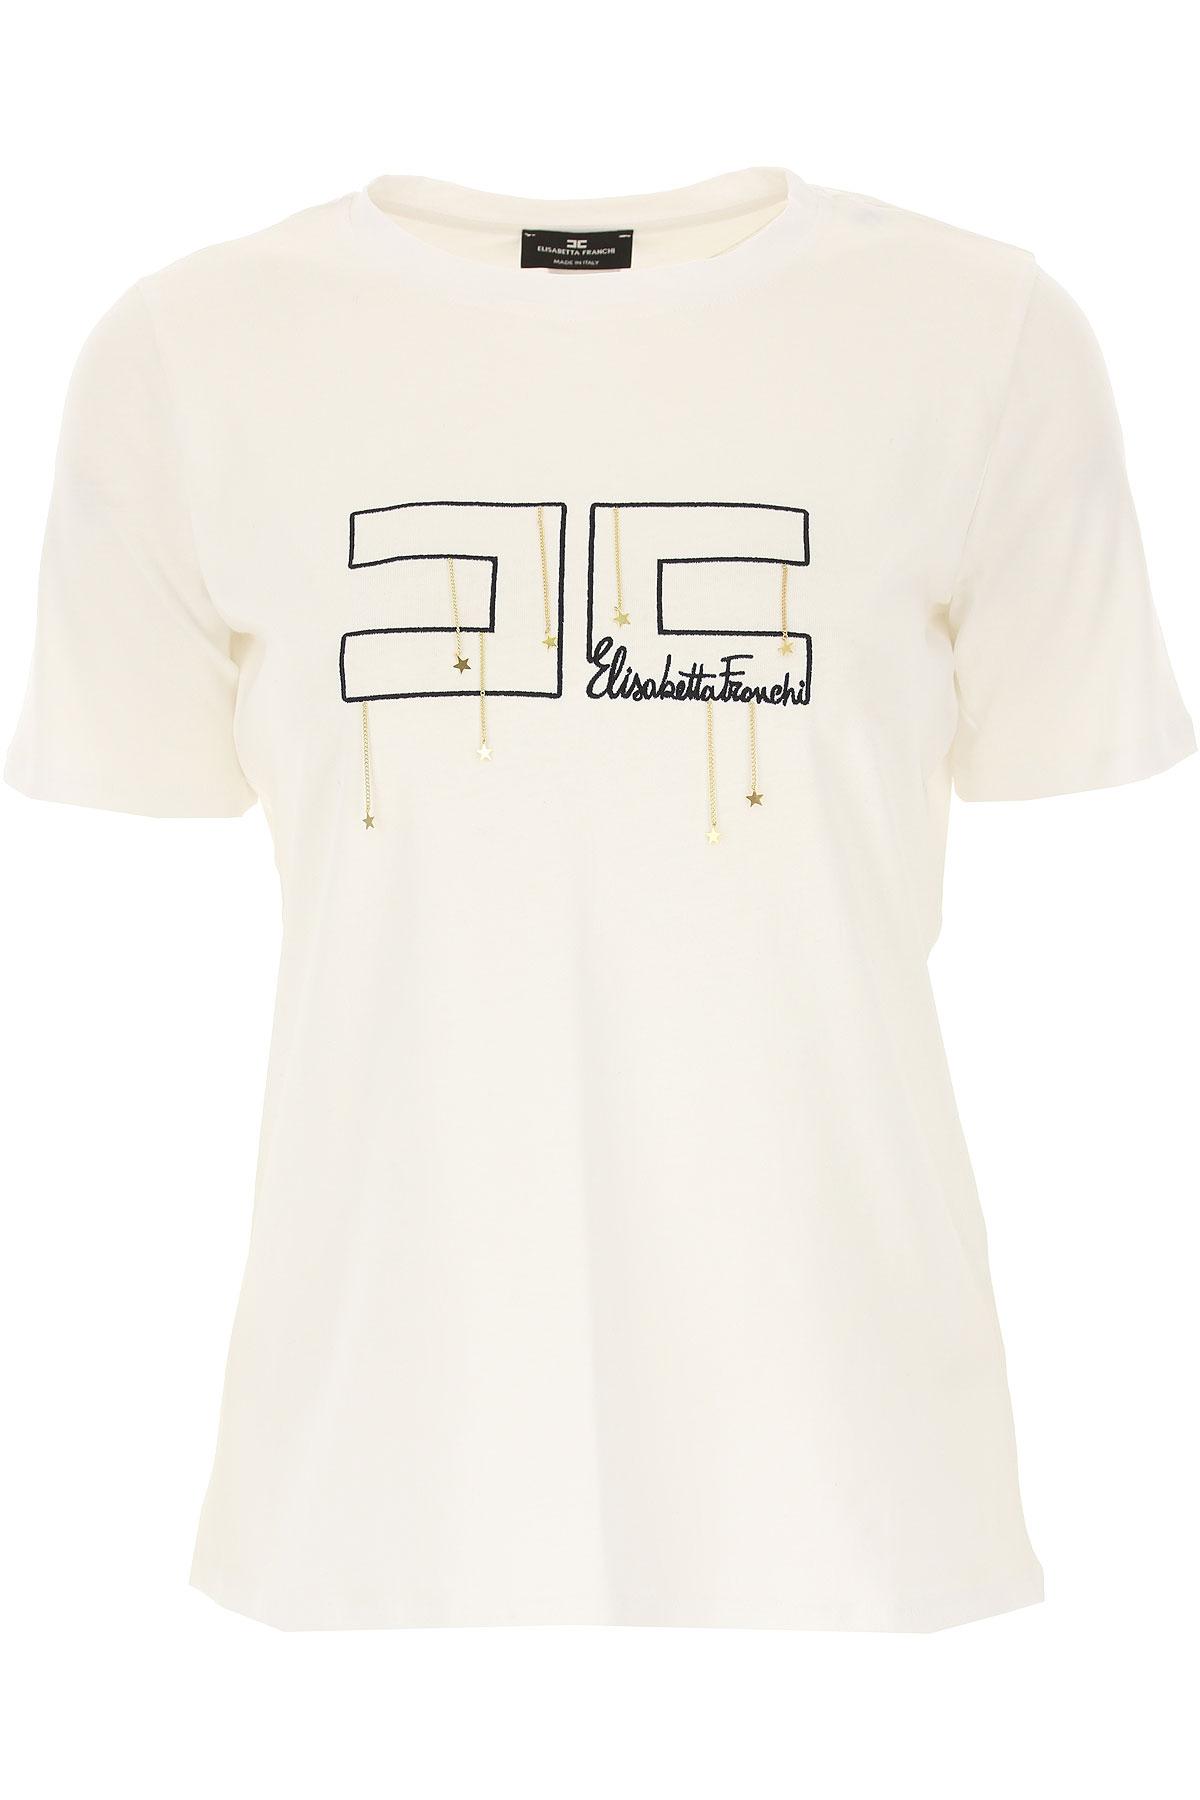 Elisabetta Franchi Cotton T-shirt For Women in White - Lyst